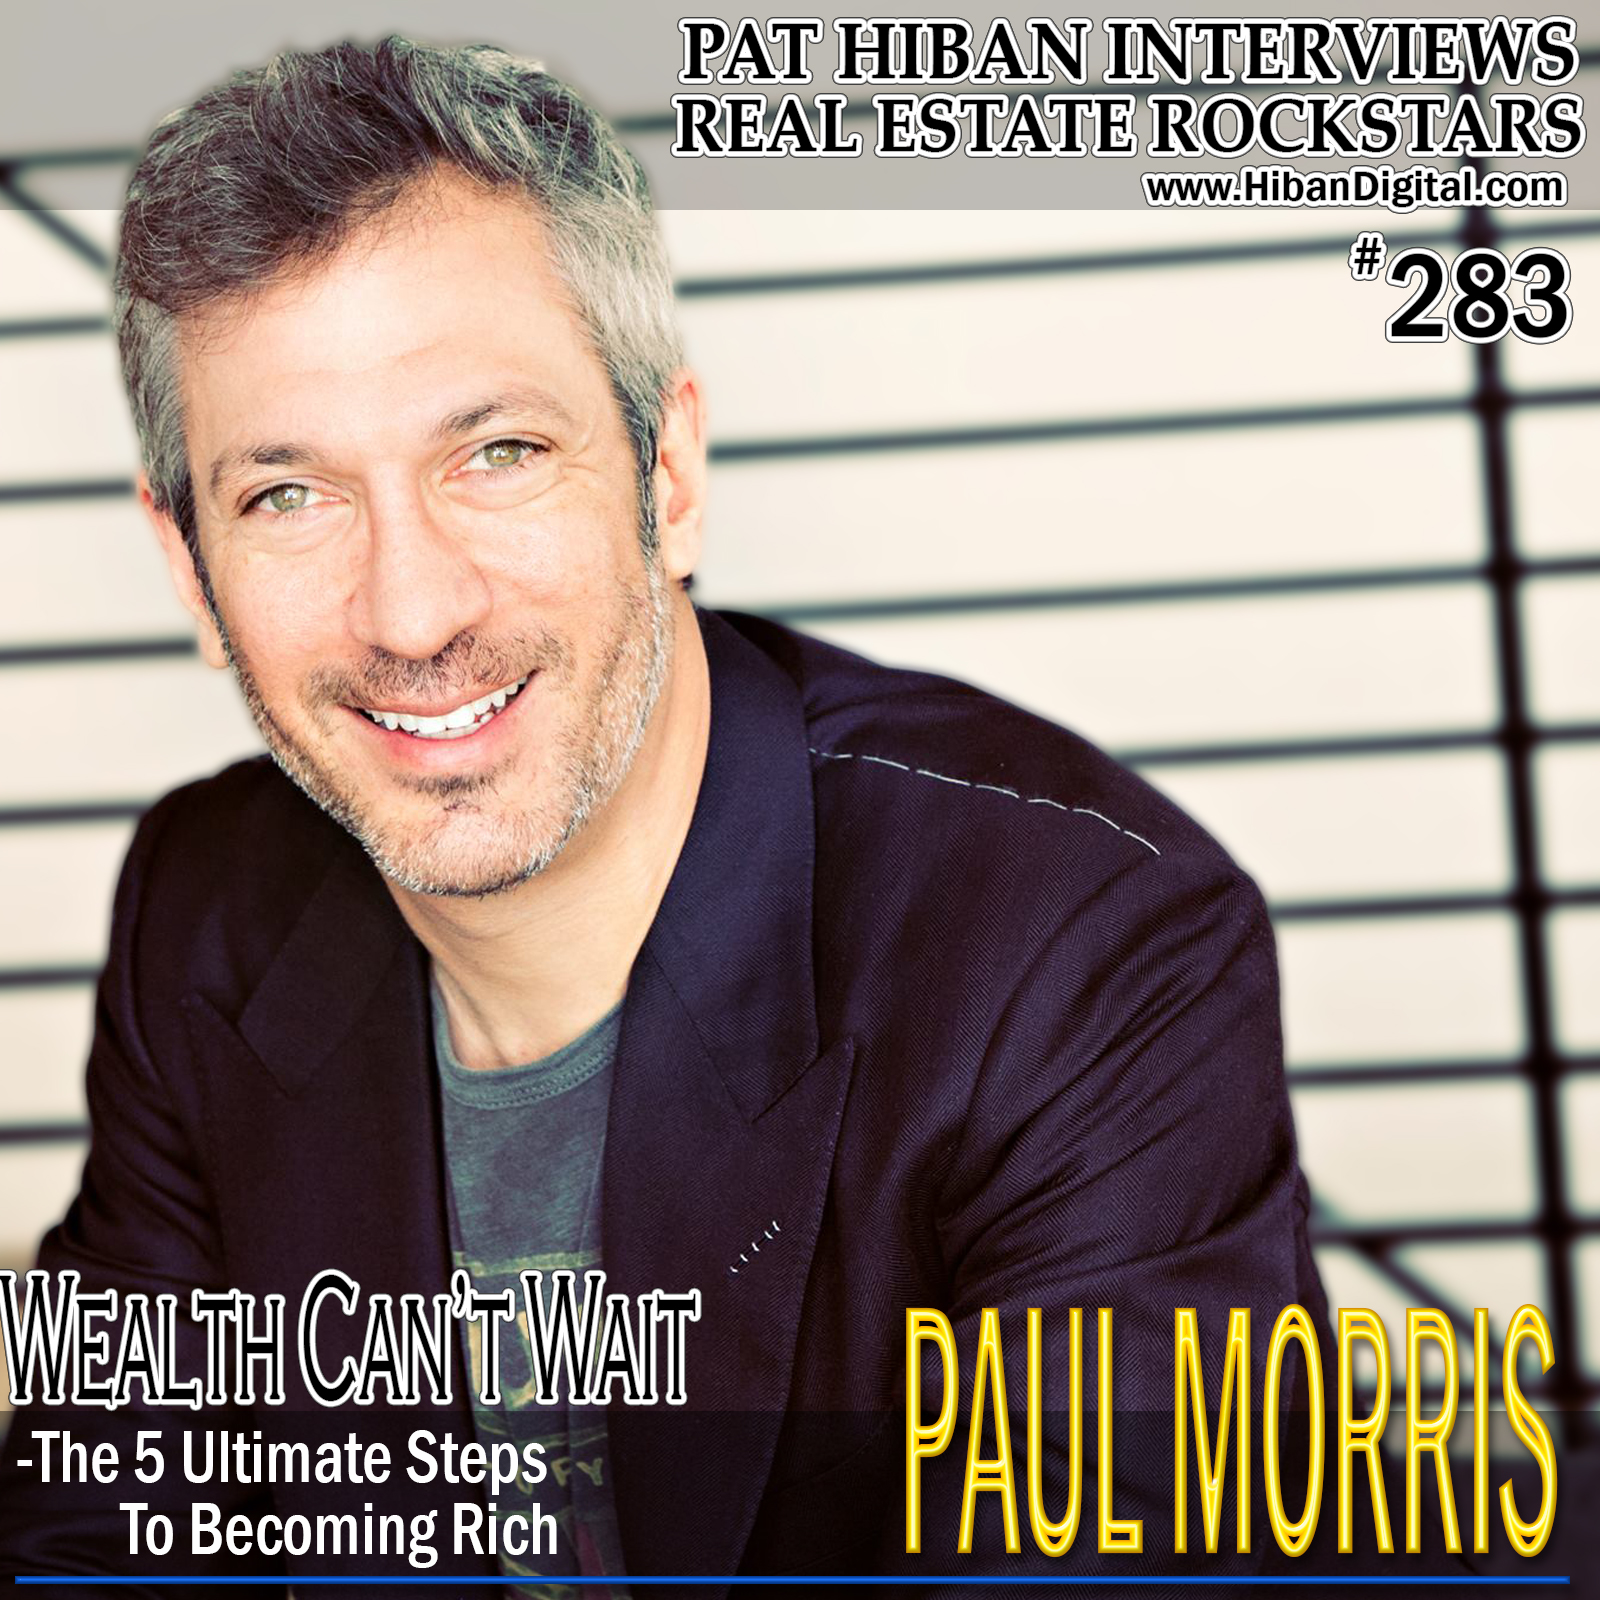 Paul Morris Net Worth